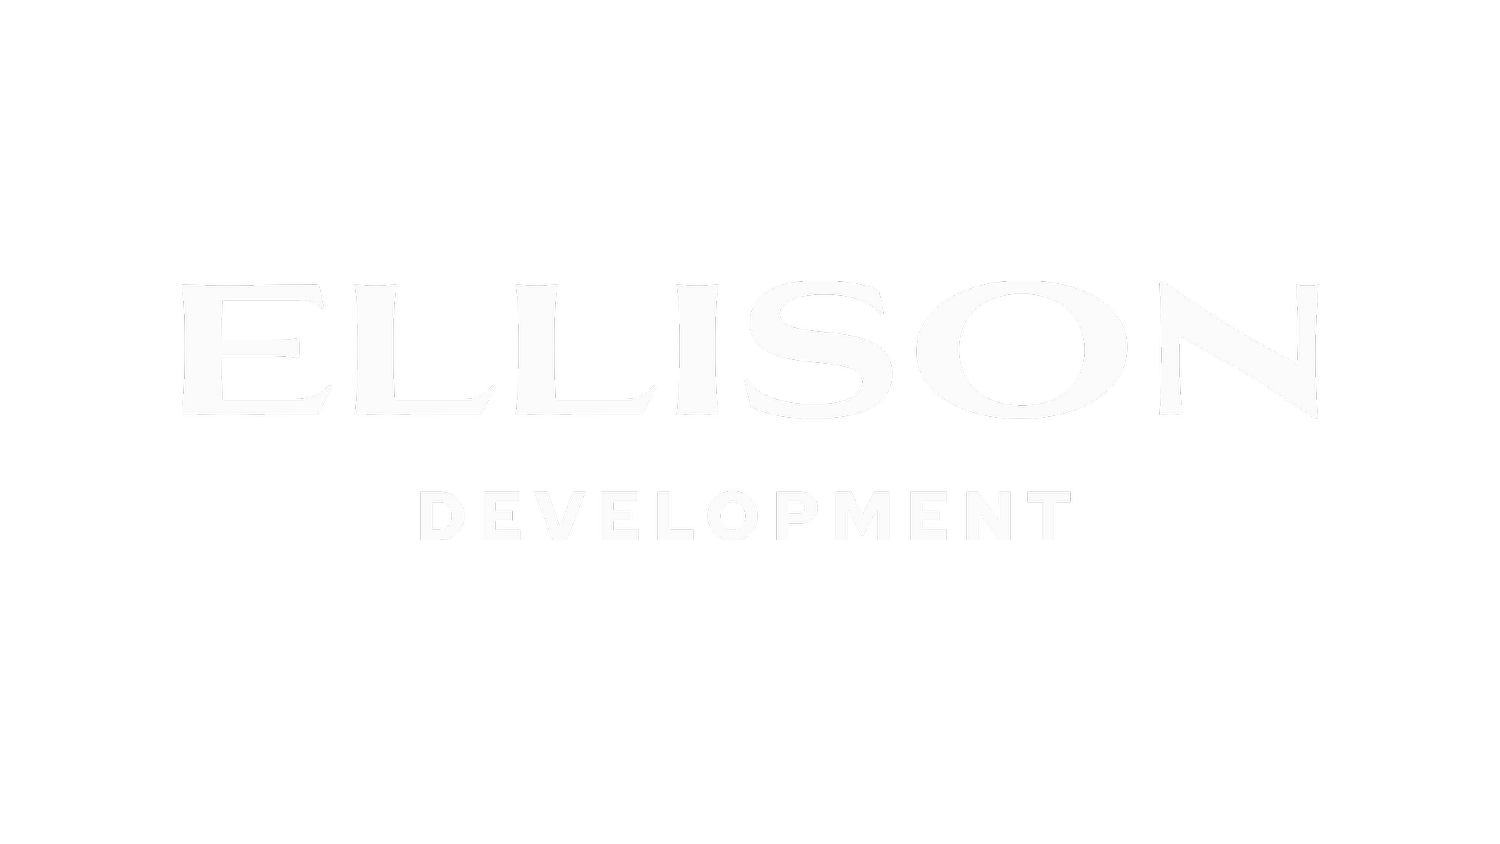 Ellison Development